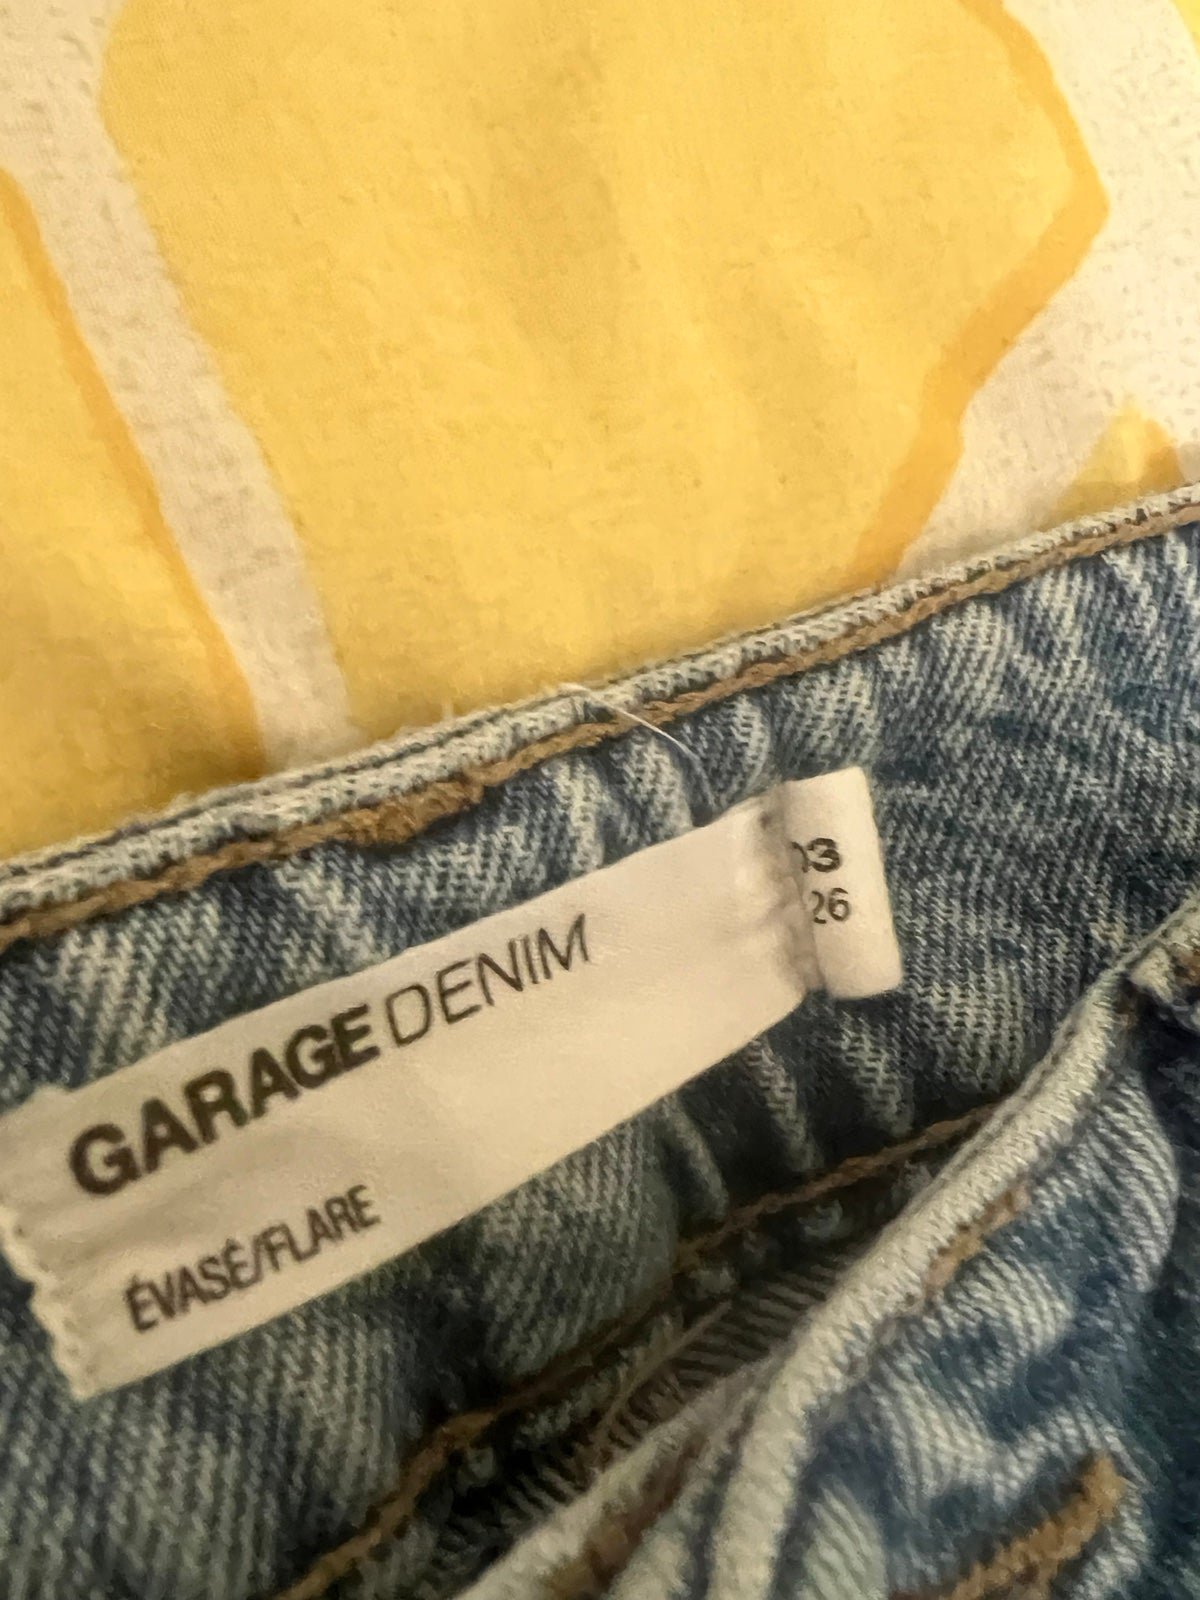 the Lowest price Garage Denim Flare Jeans 26 short FUJ4kghDS hot sale